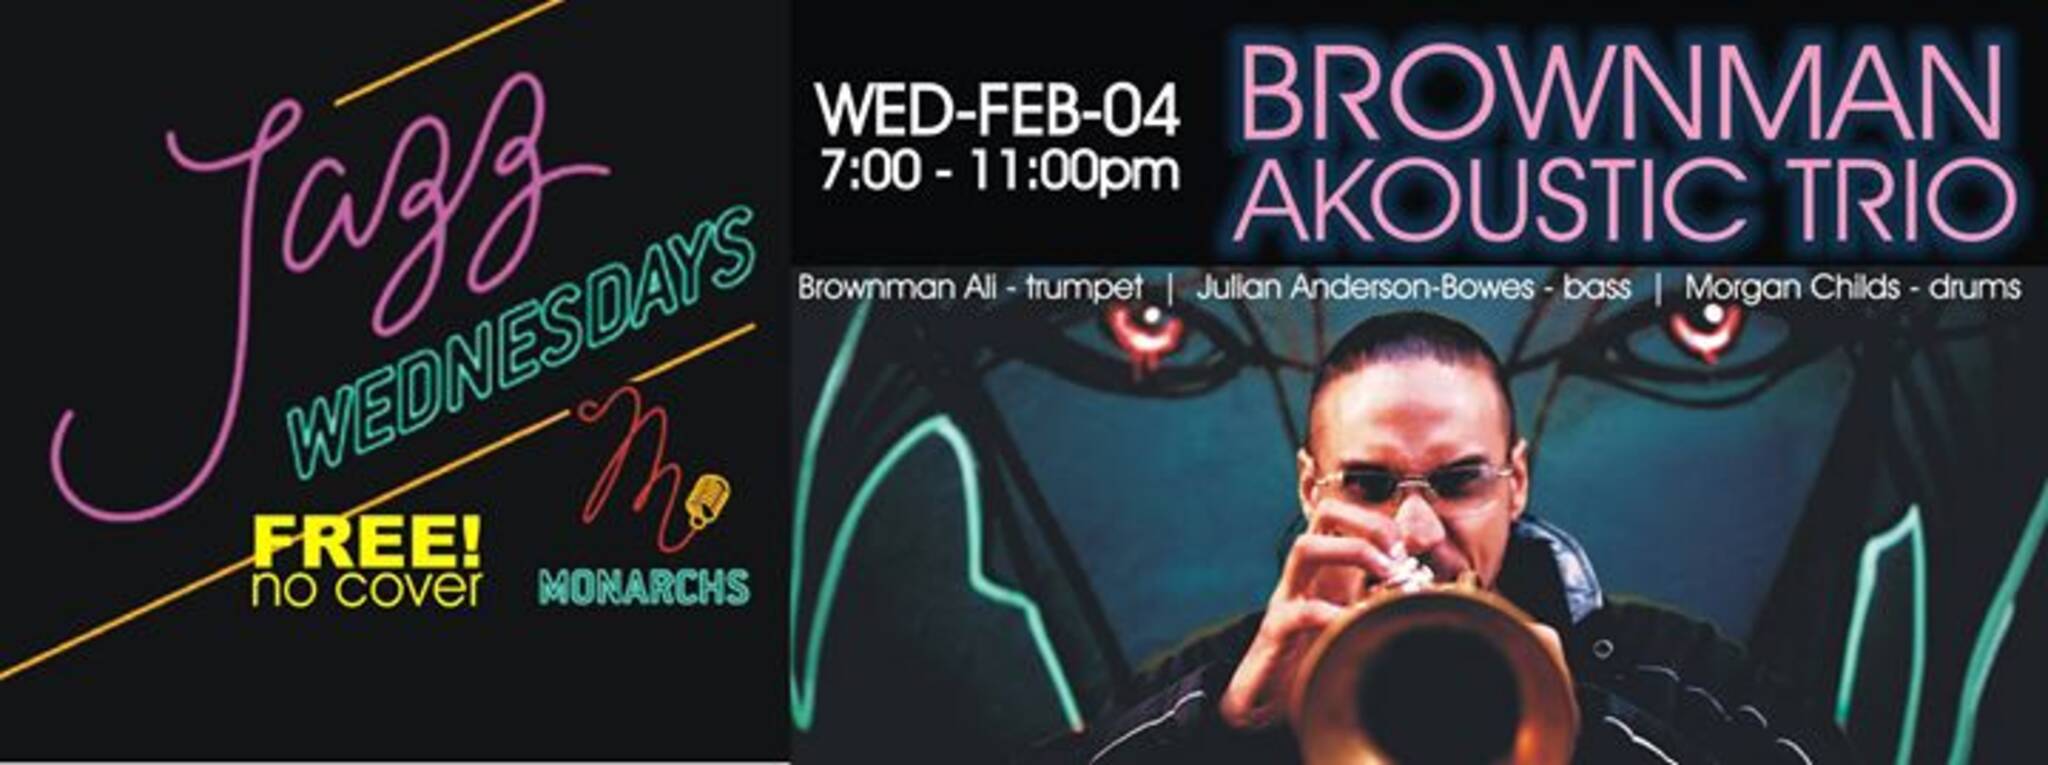 BROWNMAN AKOUSTIC TRIO feat. DAVE RESTIVO @ Monarchs Pub, 7-11pm, $FREE ...